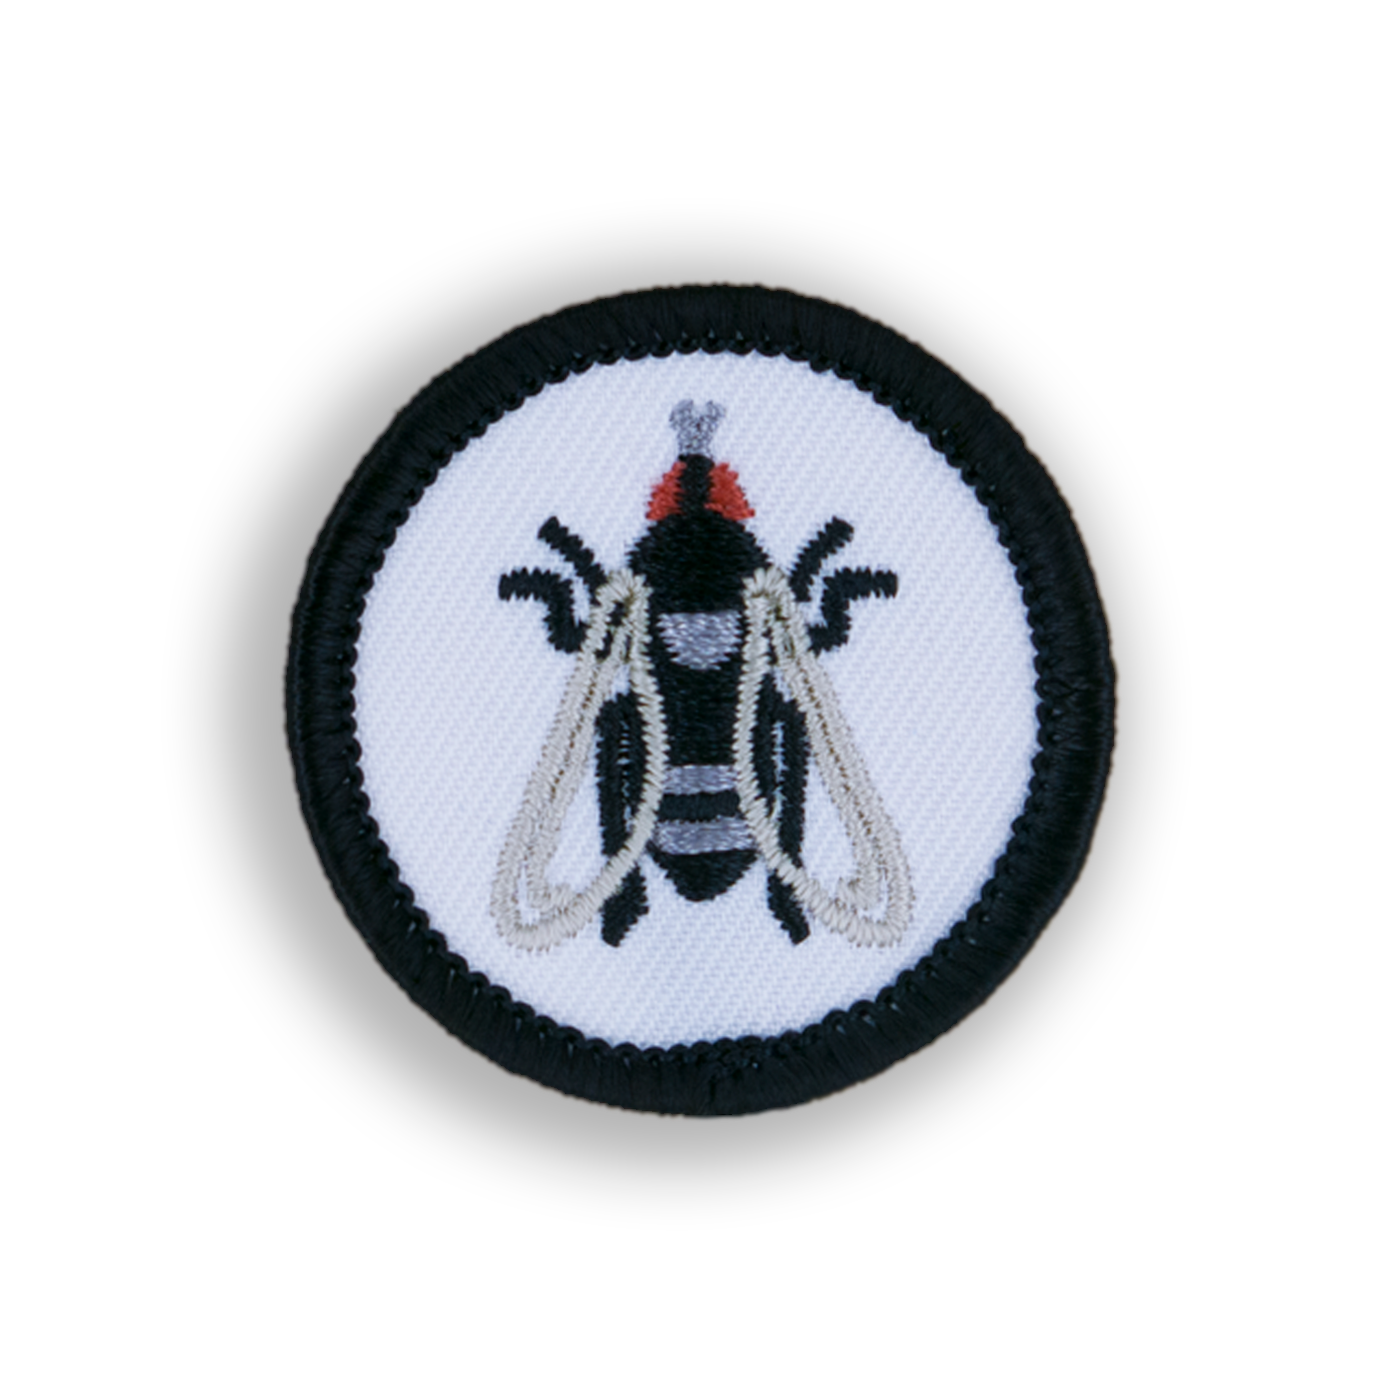 Black Flies Patch - Demerit Wear - Fake Merit Badges